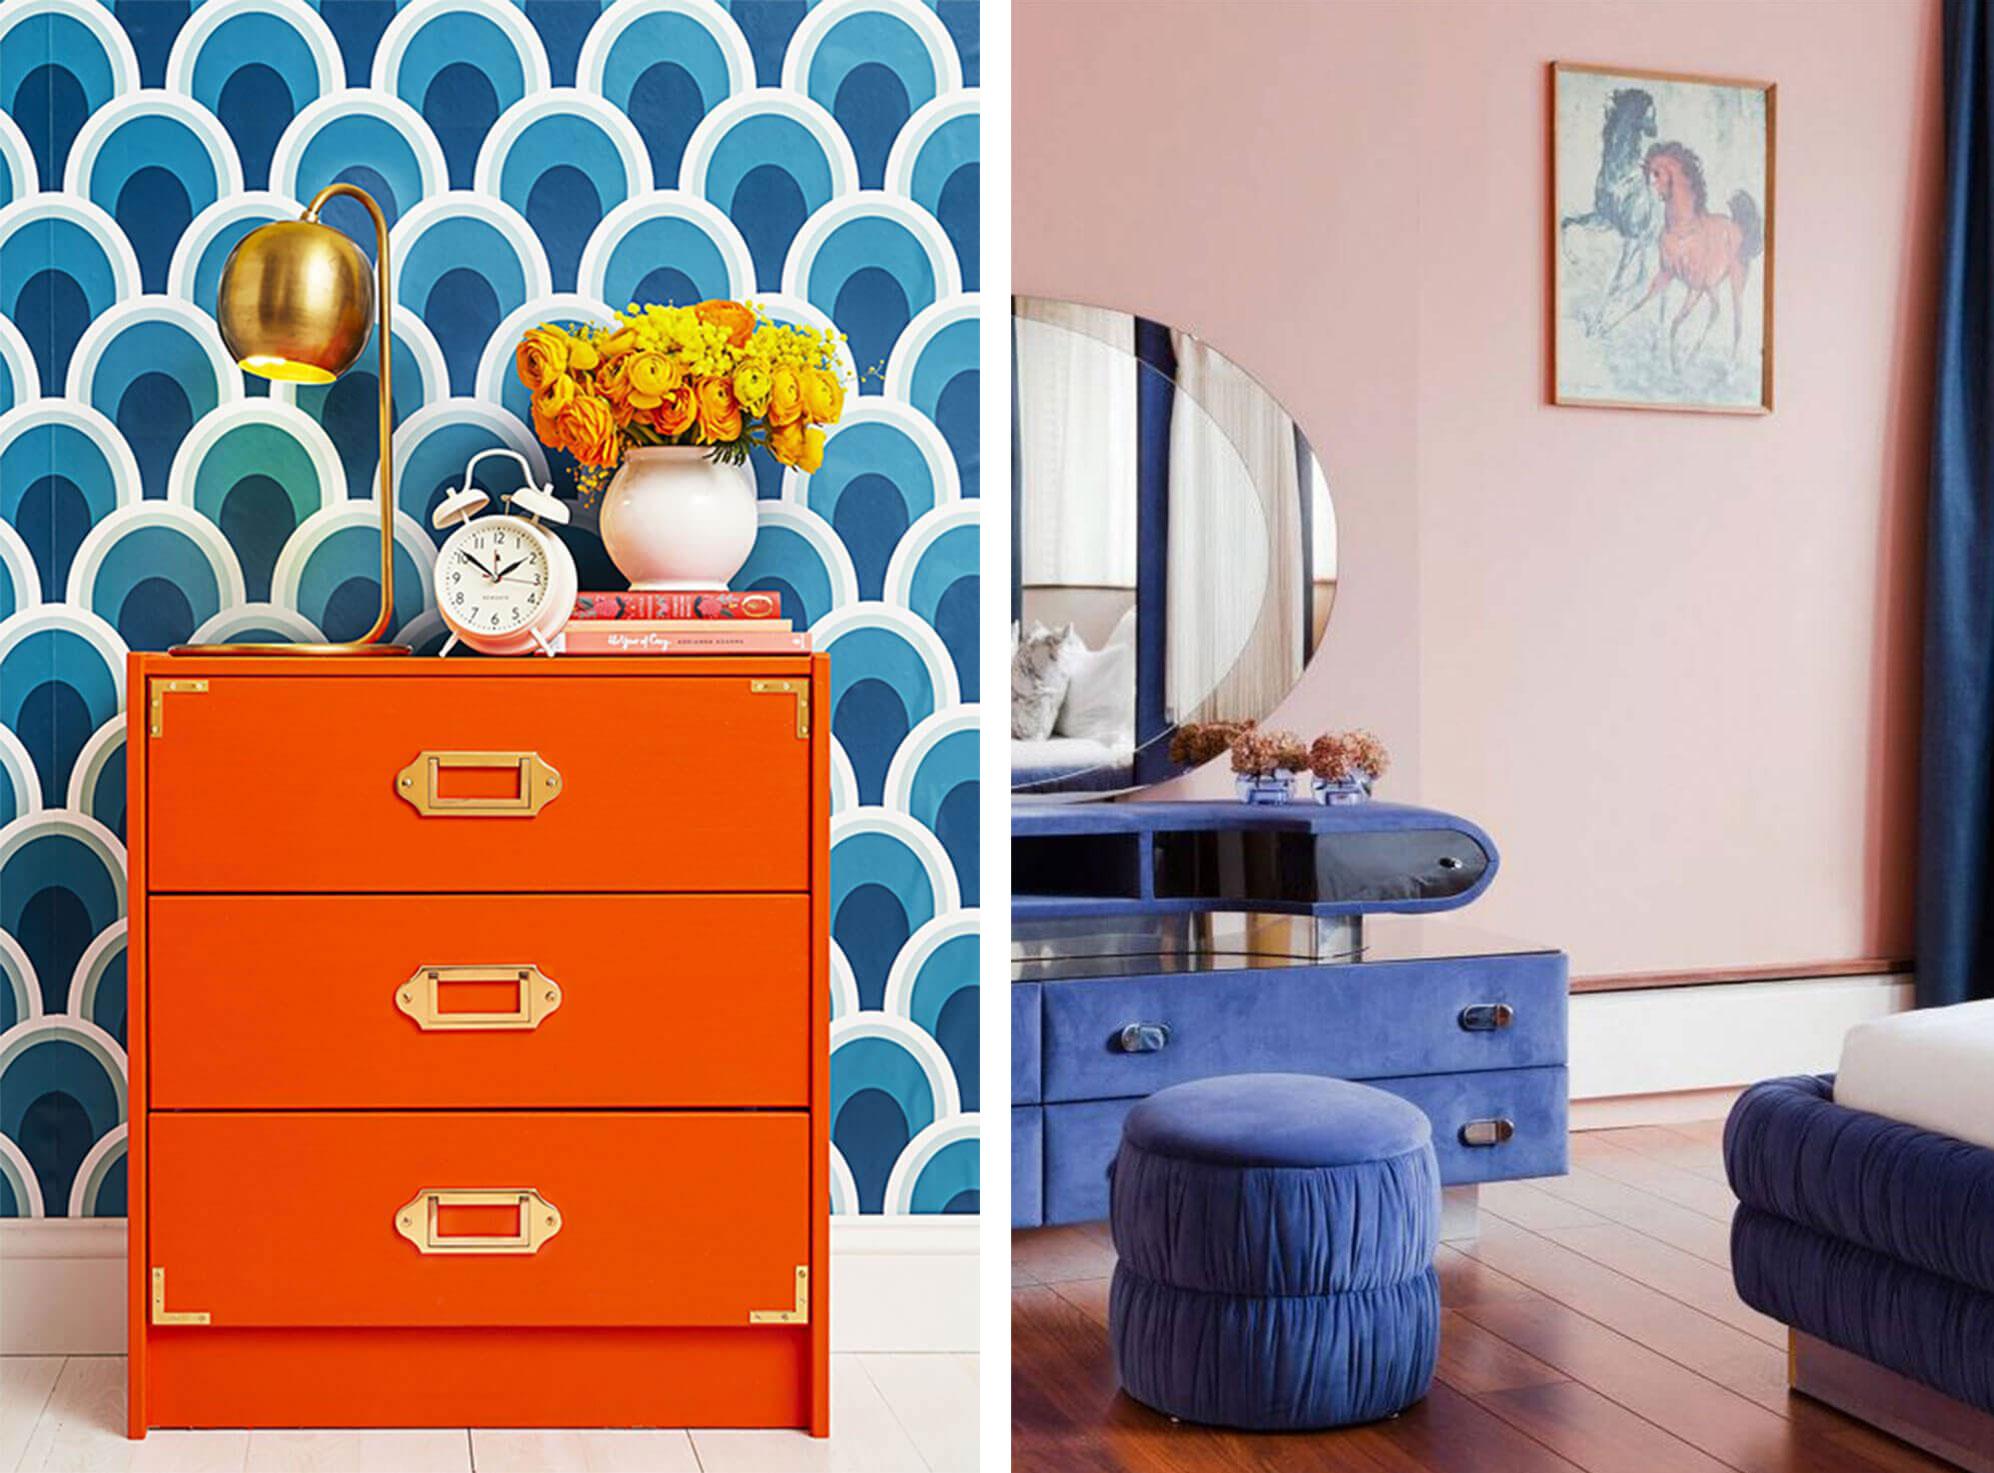 Vintage bright orange chest of drawers against blue patterned wallpaper